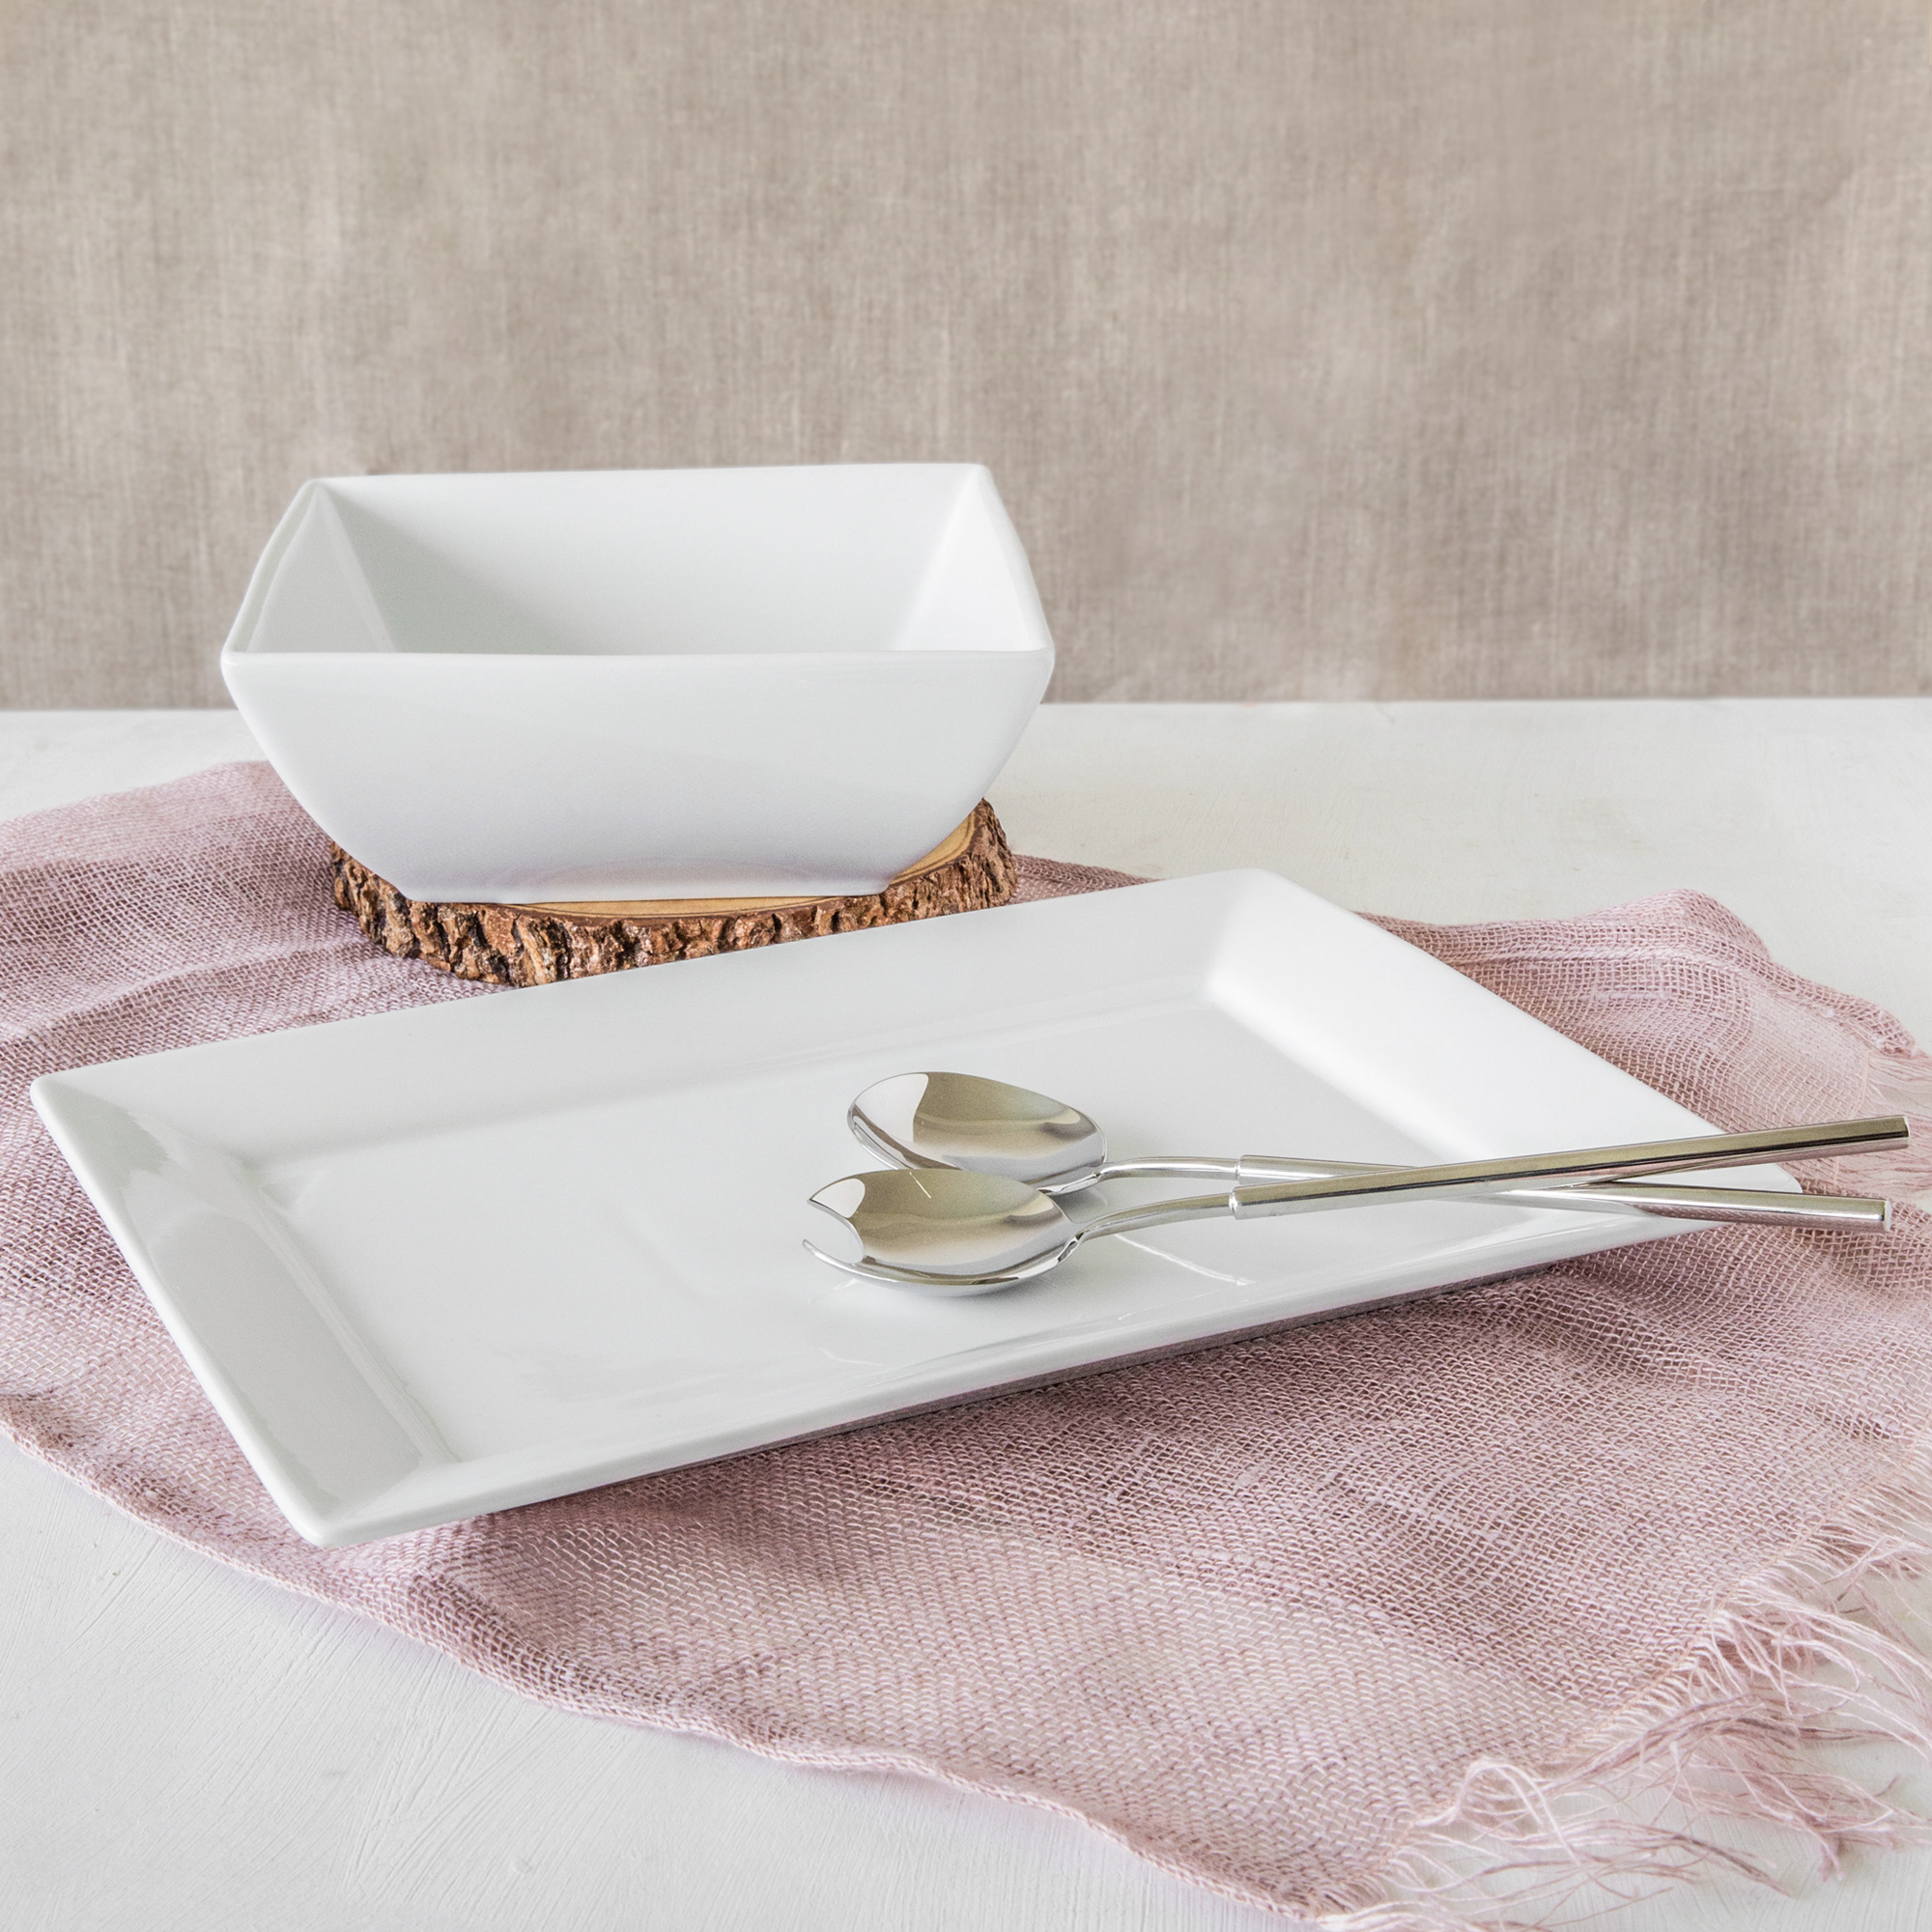 Better Homes & Gardens Porcelain Square Bowl and Platter Set, White - image 4 of 7